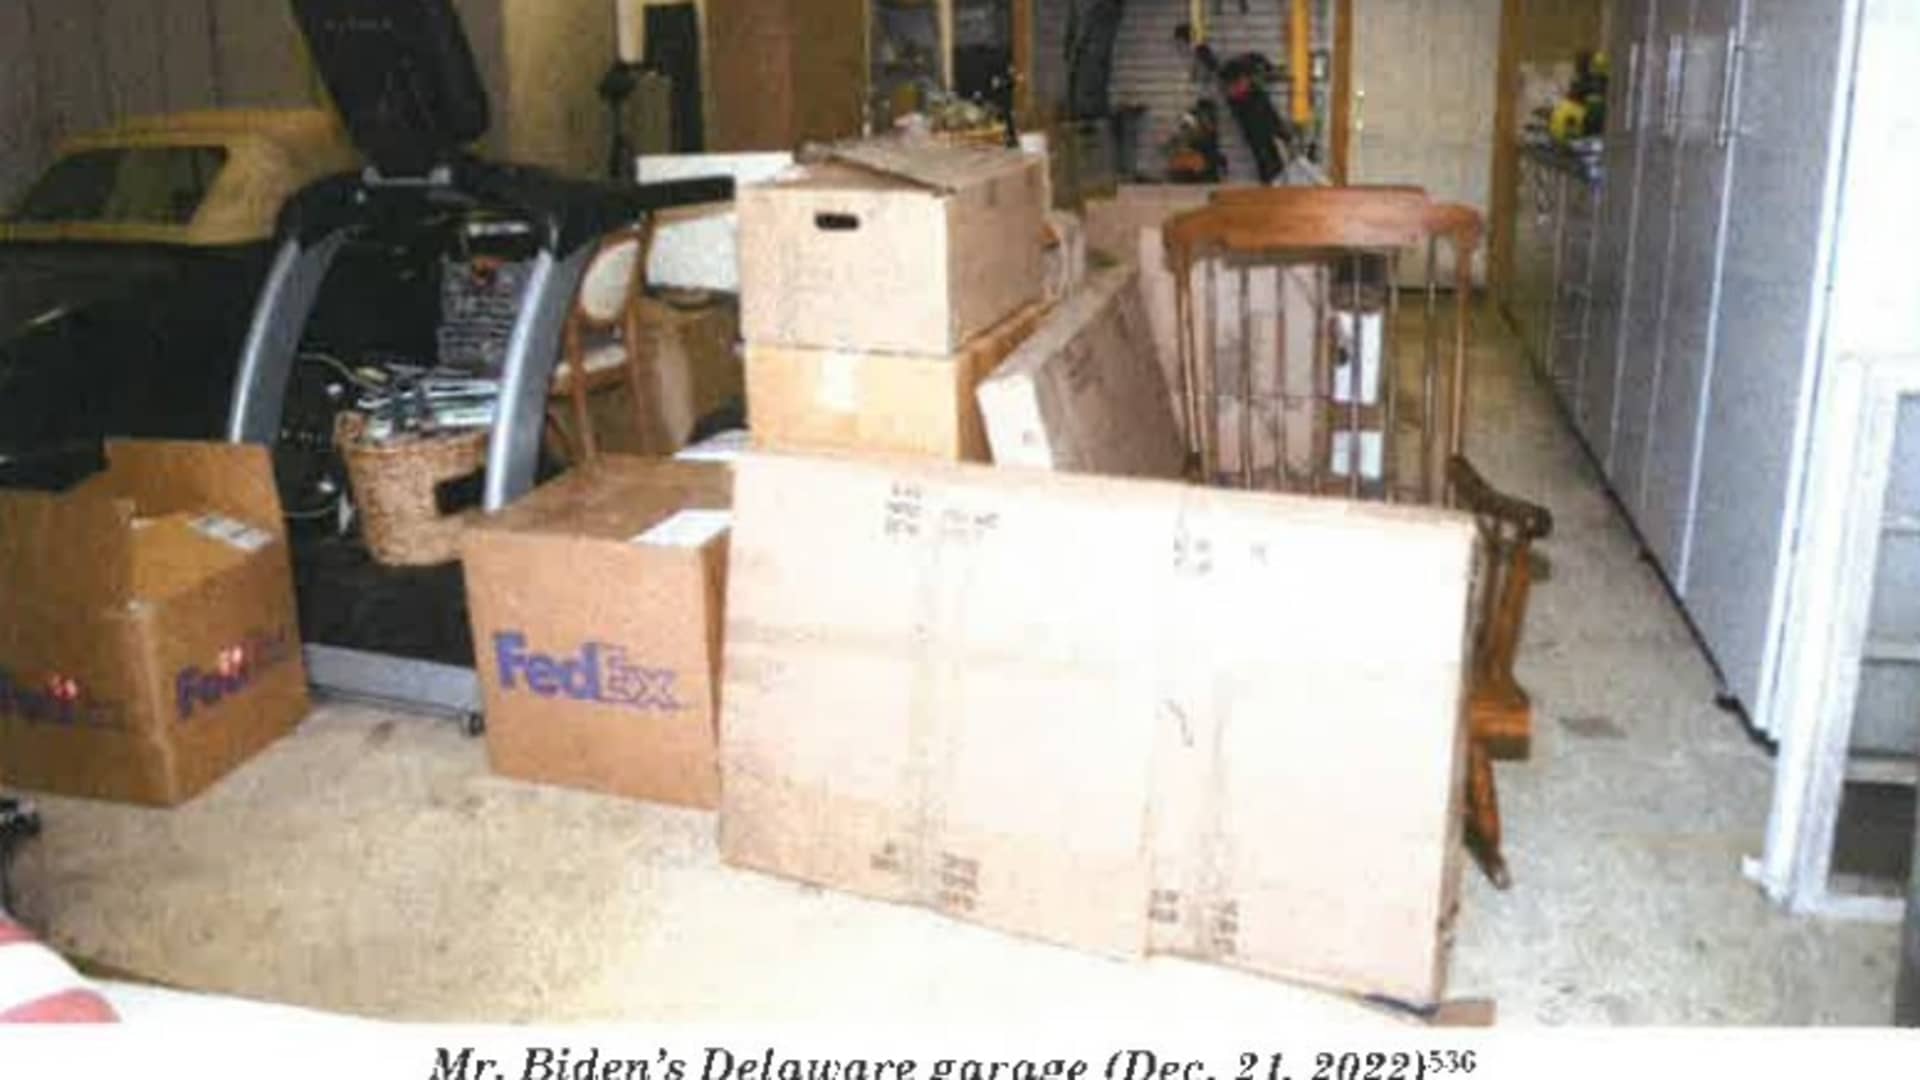 US President Joe Biden's Delaware garage with classified documents on December 21, 2022.